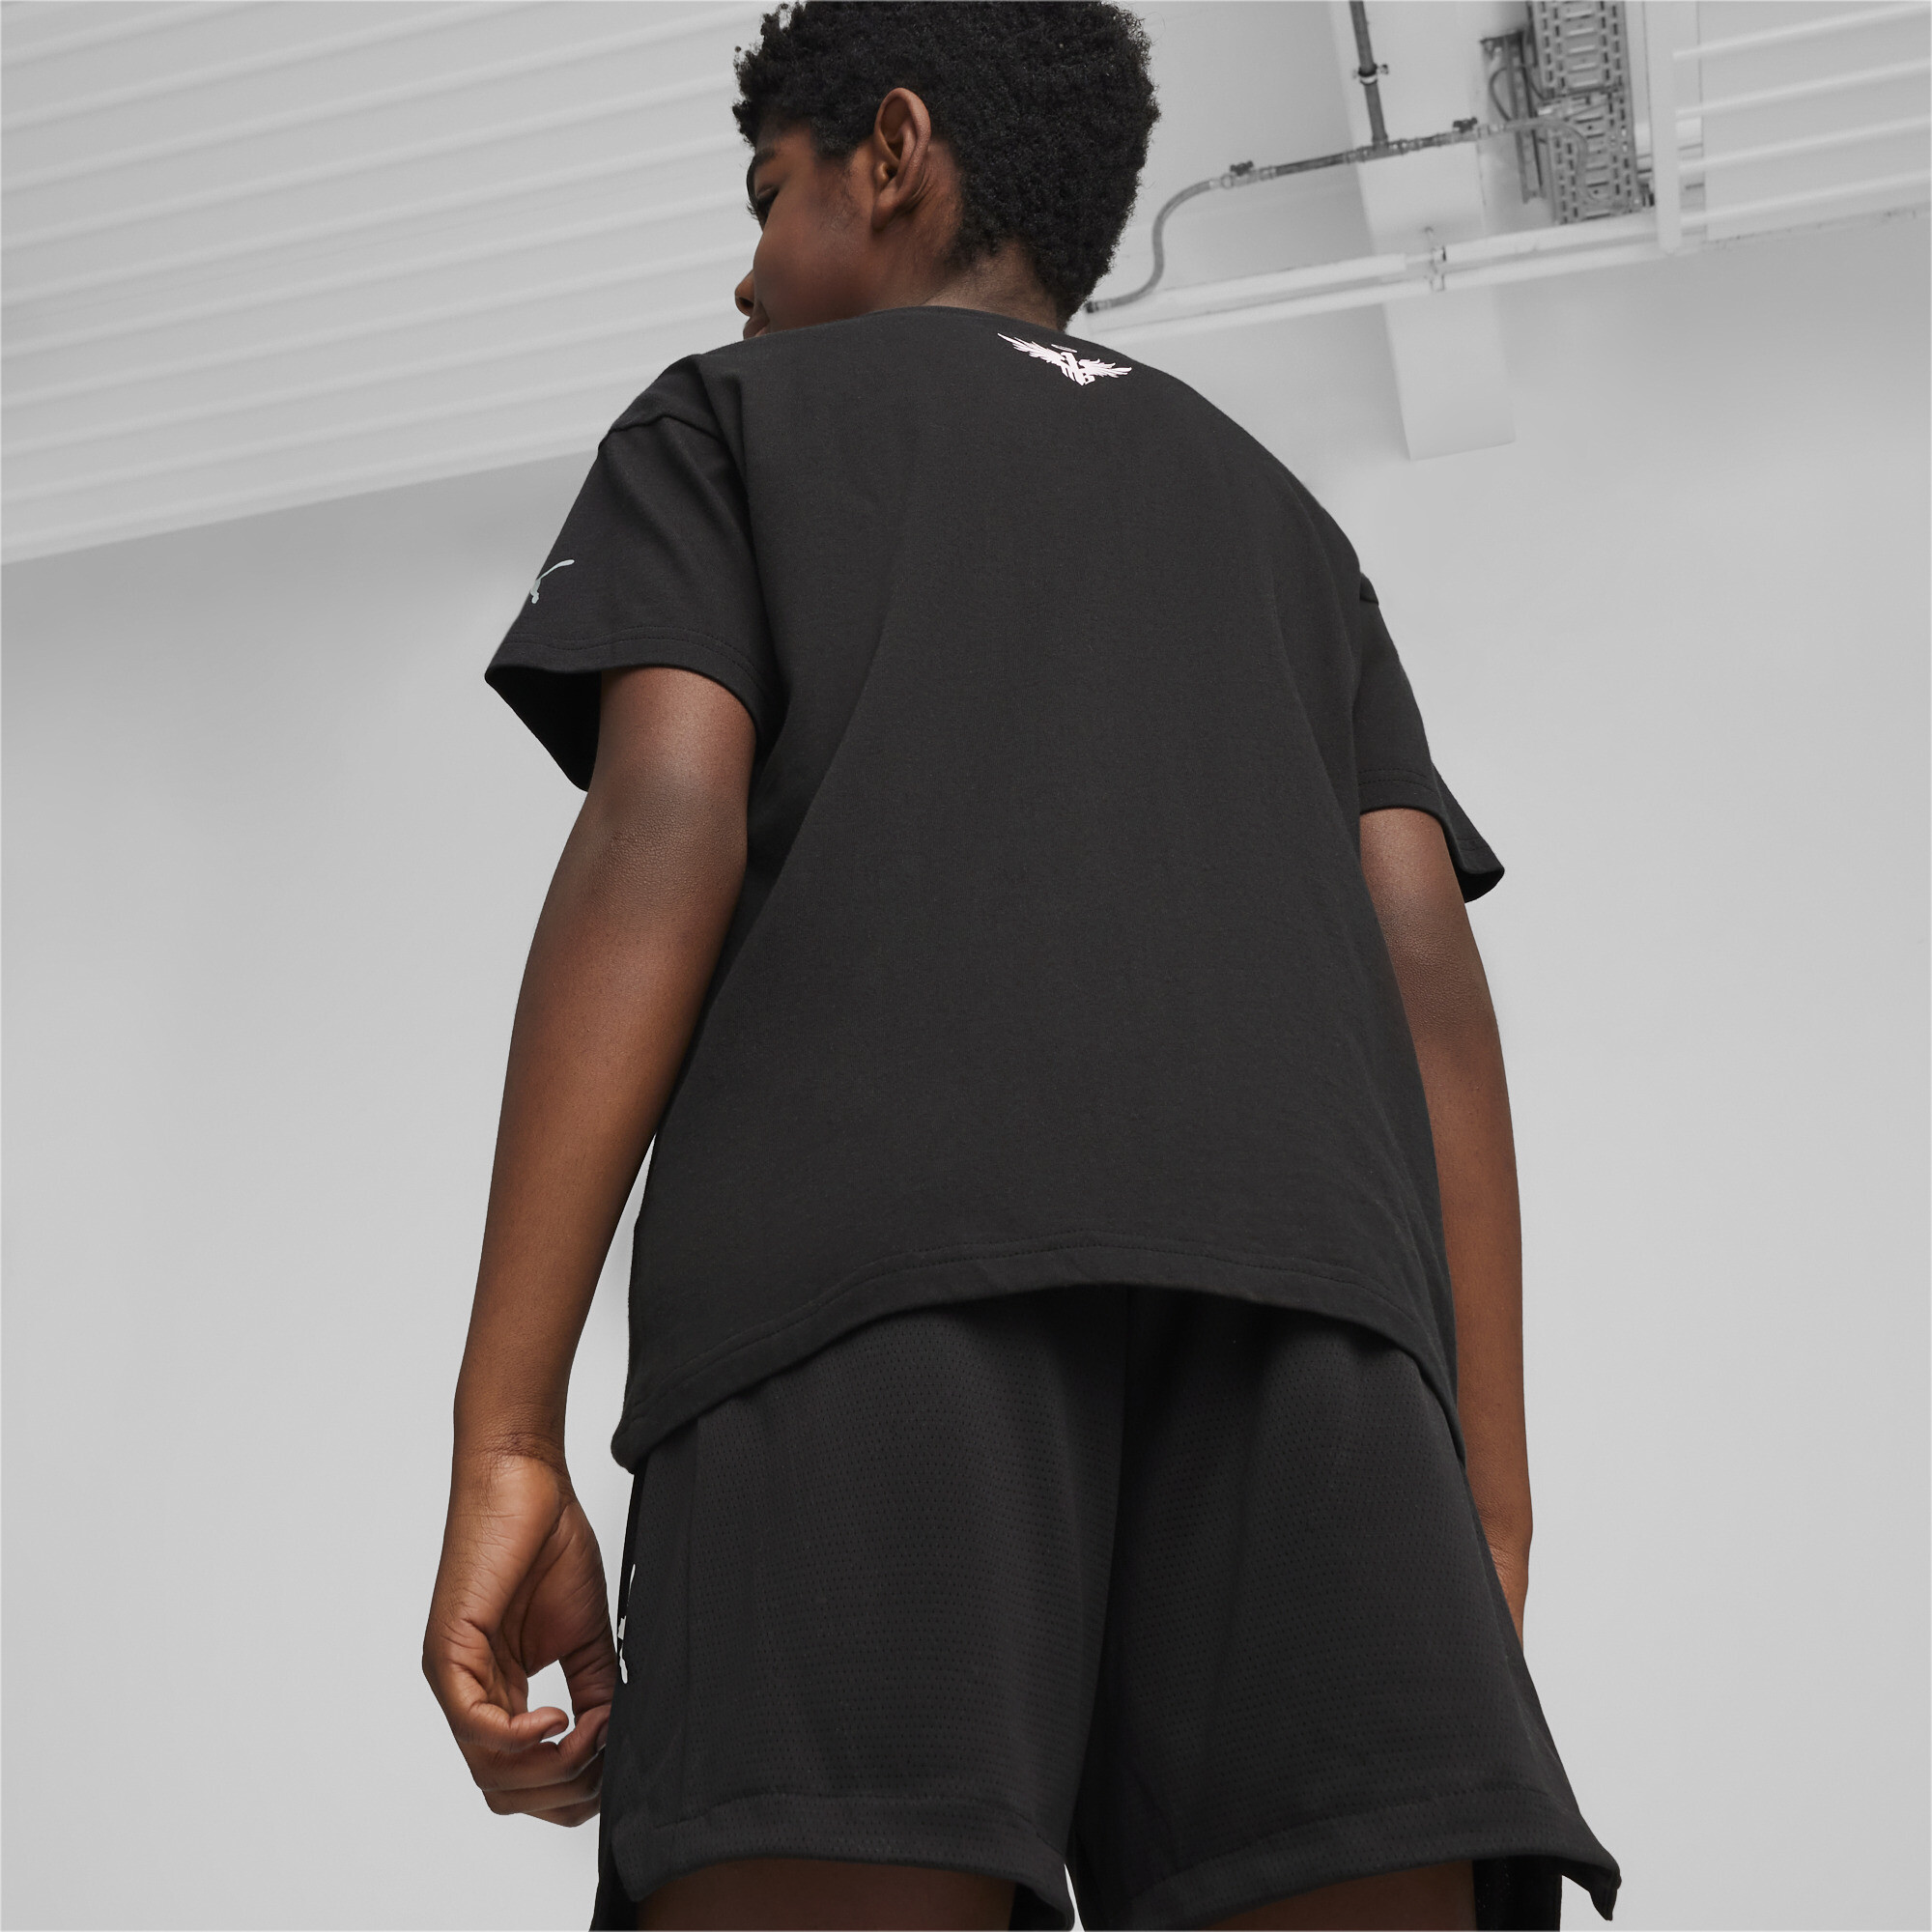 Puma MELO IRIDESCENT Boys' T-Shirt, Black, Size 15-16Y, Age